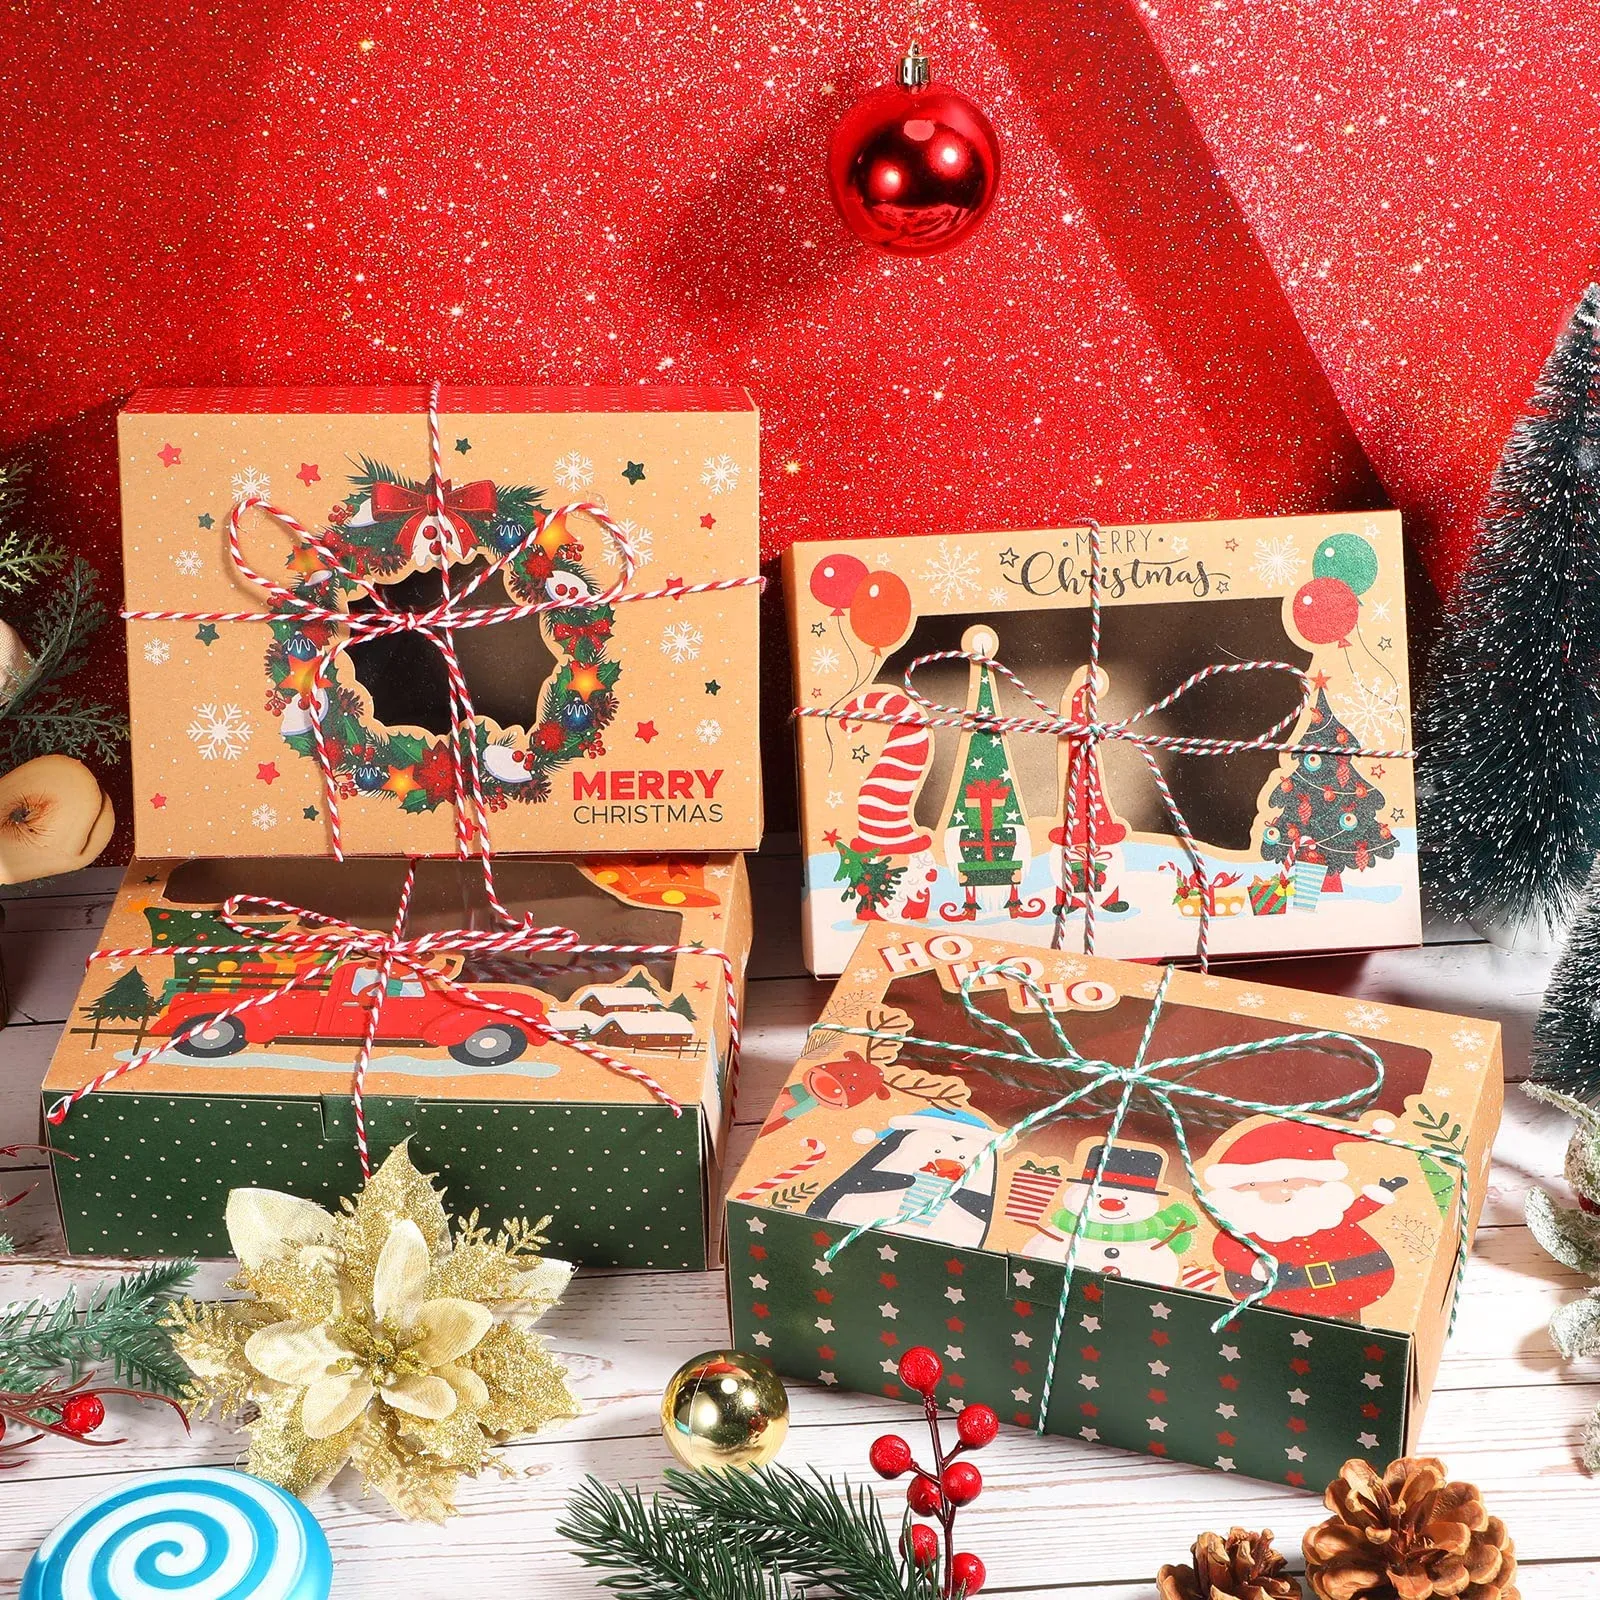 Colorf Cookie Christmas Decorations Boxes Patroon met raam grote bakkerij eten traktatie voor gebak cupcakes brownies donuts cadeau givin otbeg